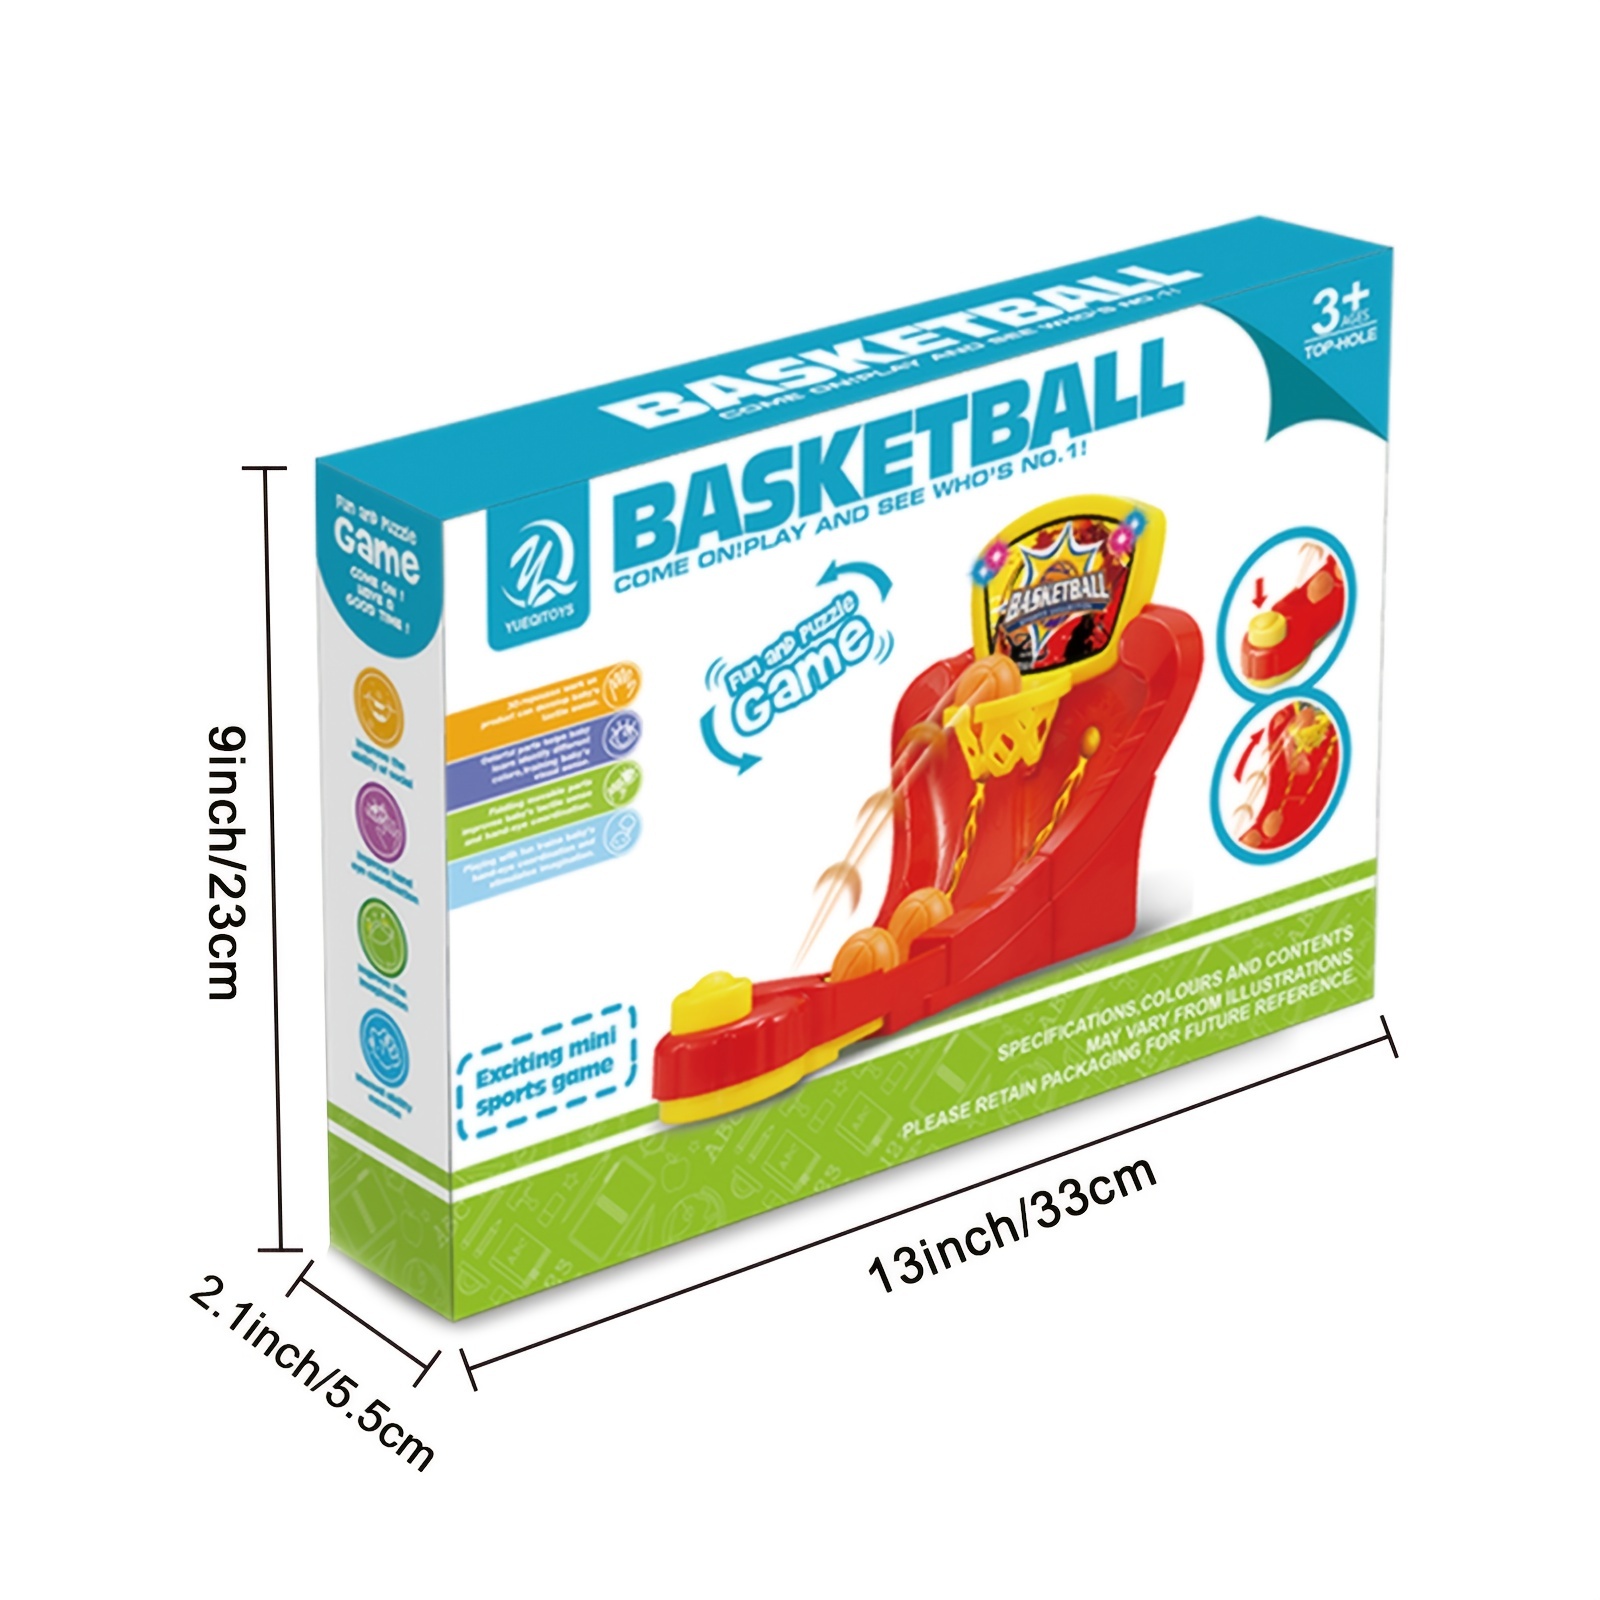 Achetez Jeu de Tir de Basket-ball de Table Mini Classique Arcade